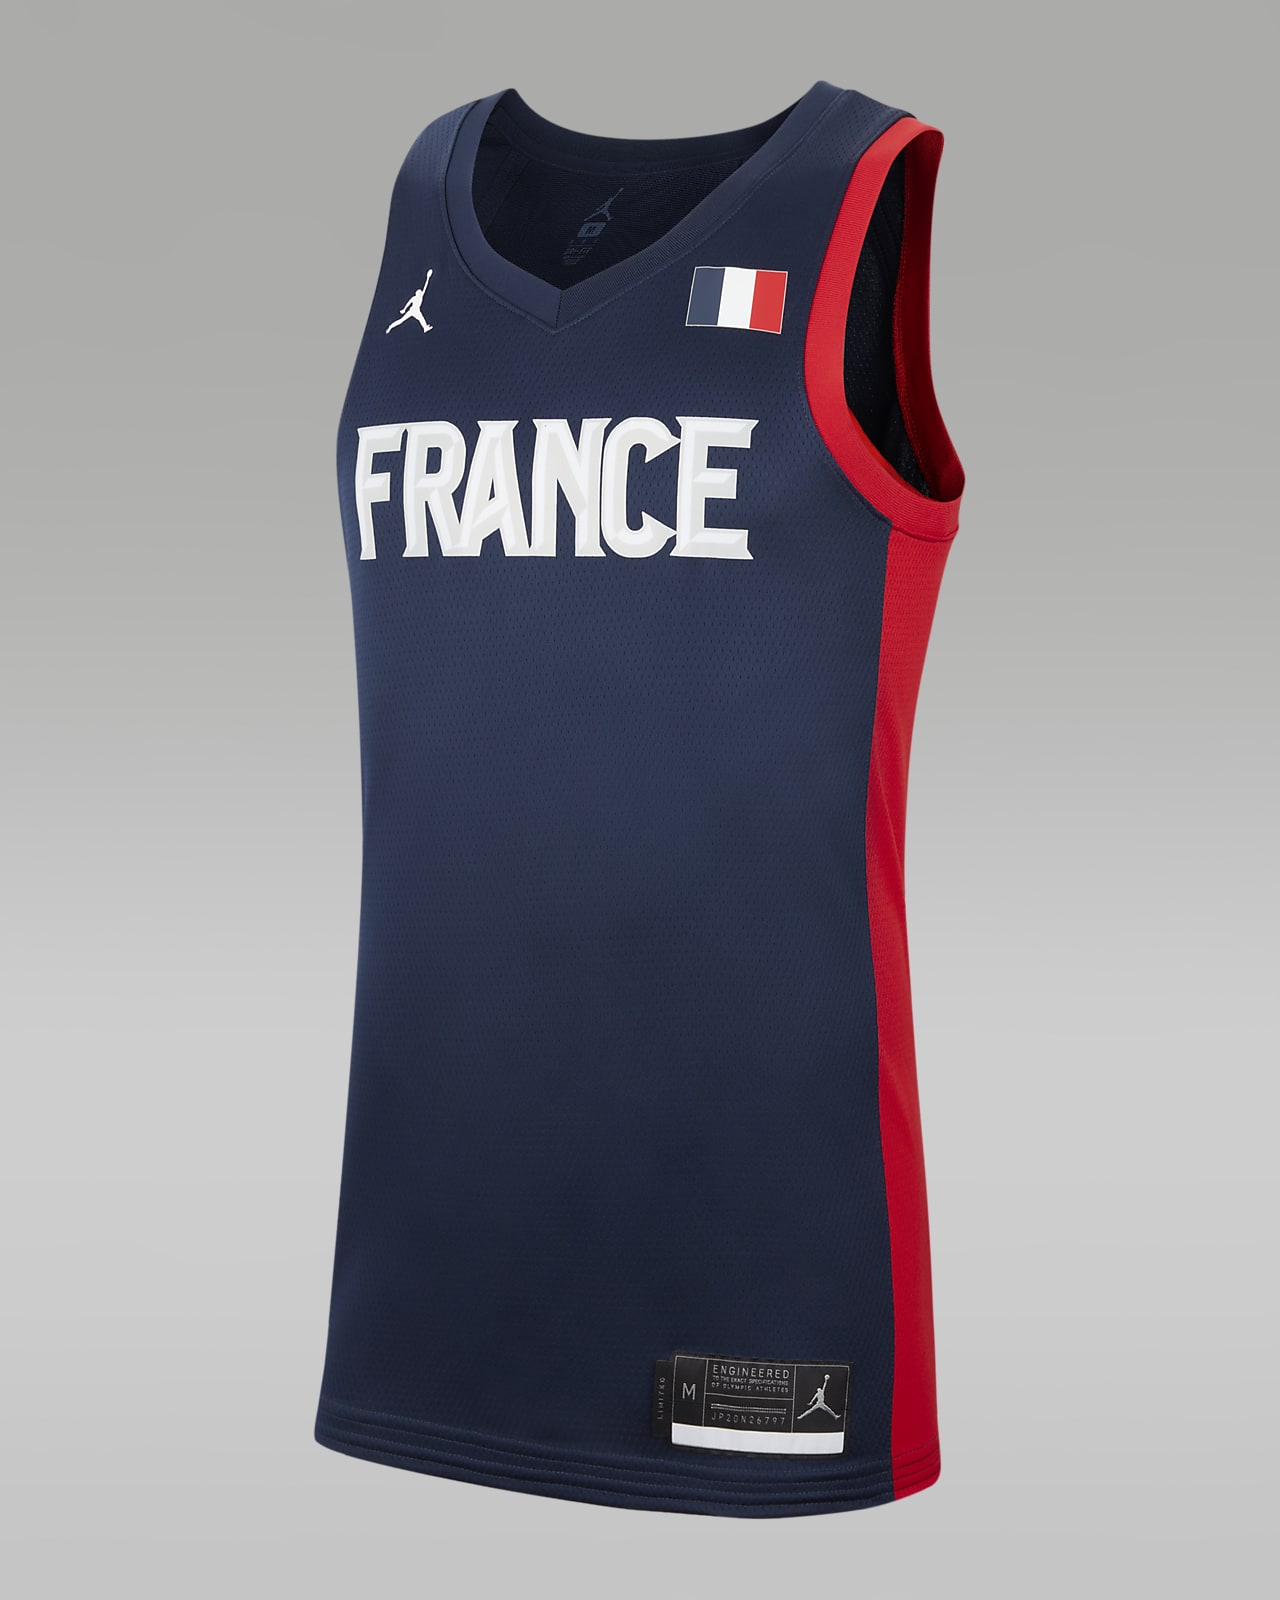 Frankreich Jordan (Road) Limited Basketballtrikot